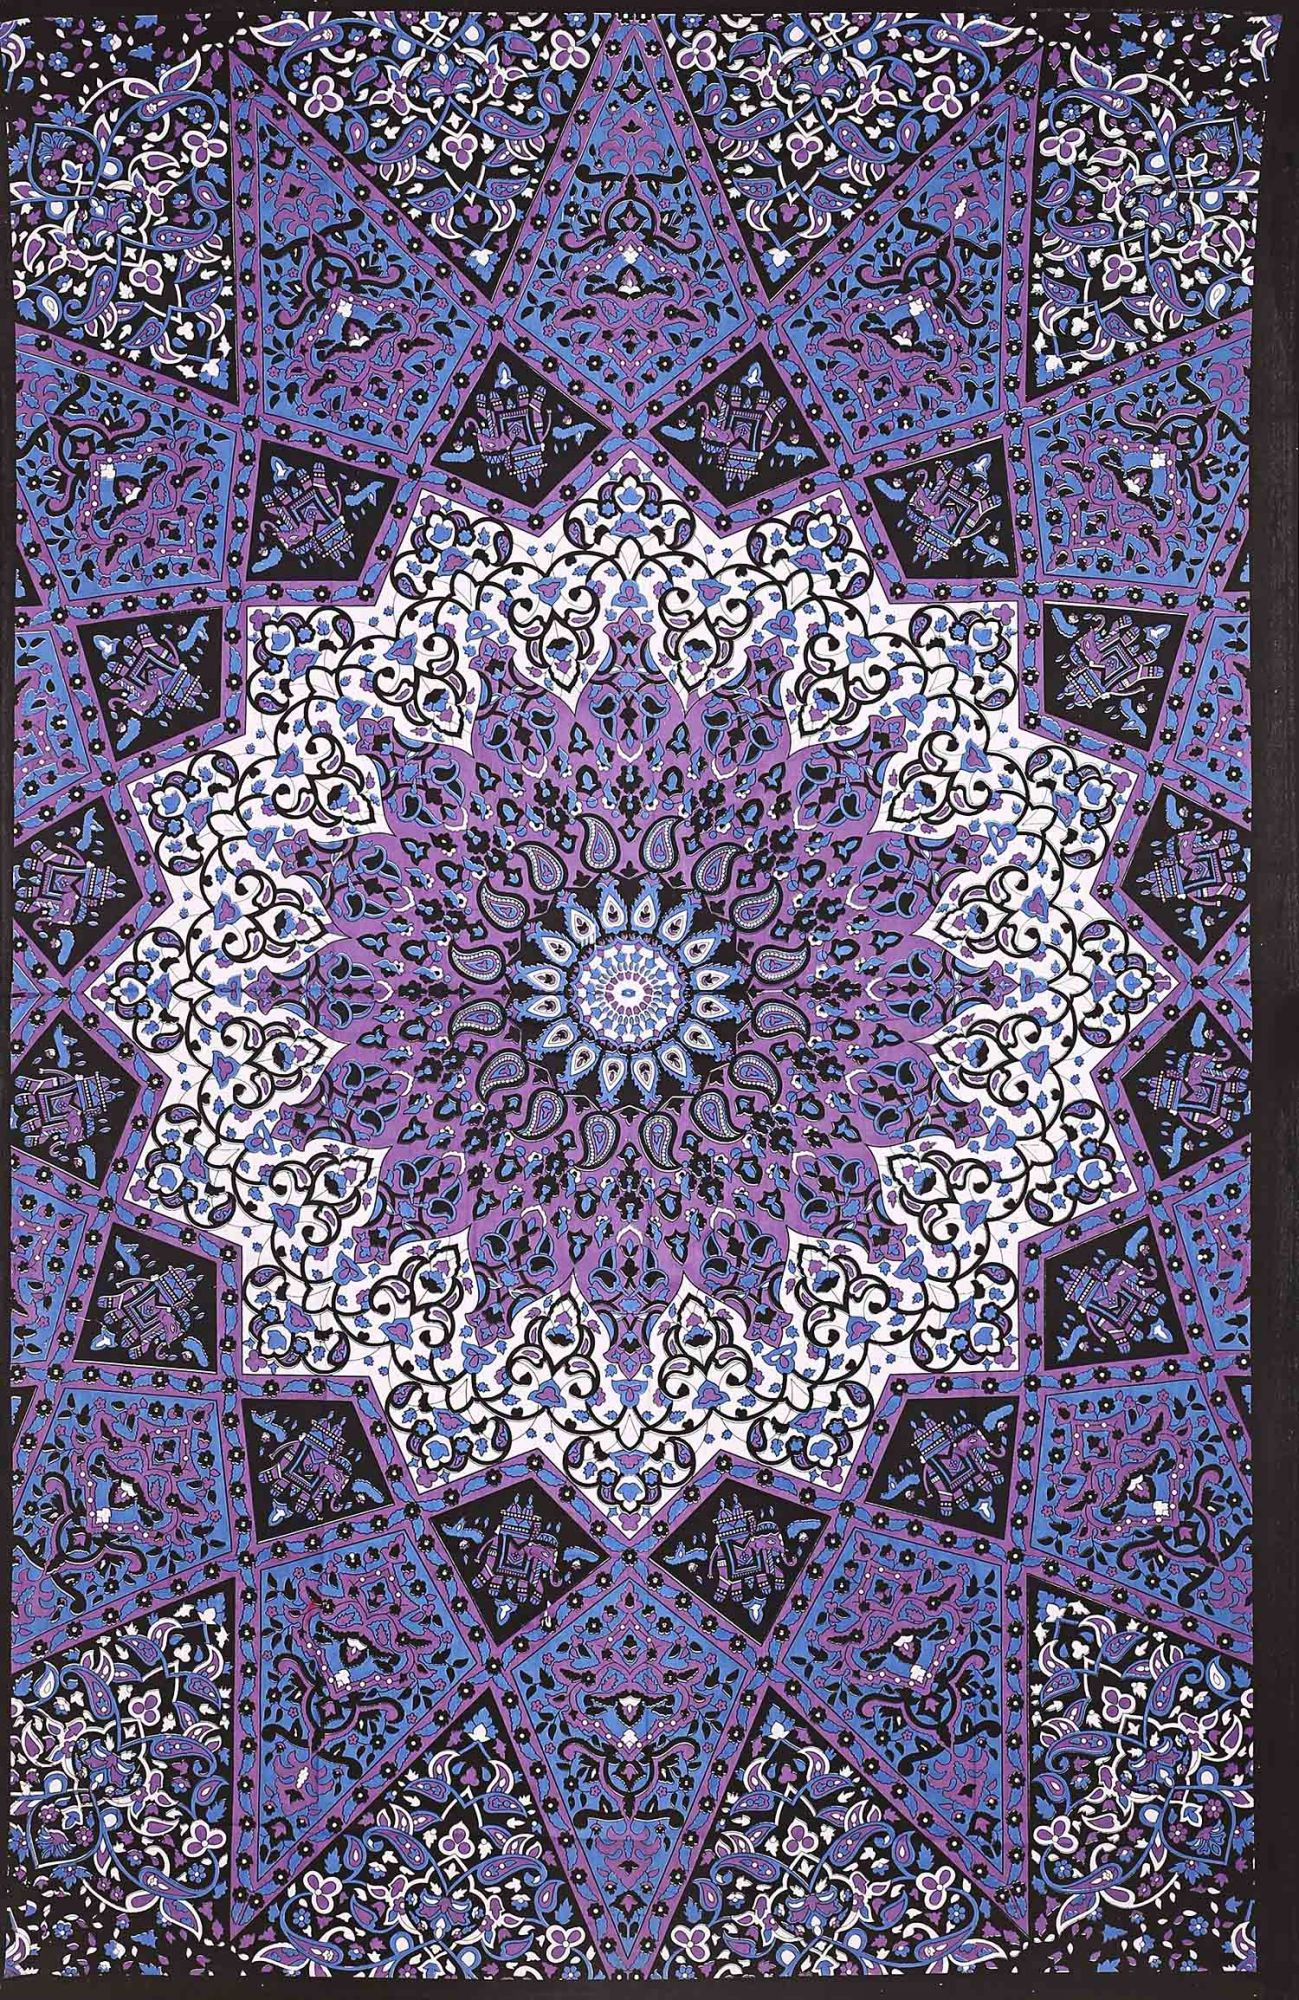 Purple Mandala tapestry wall hanging and beach throw